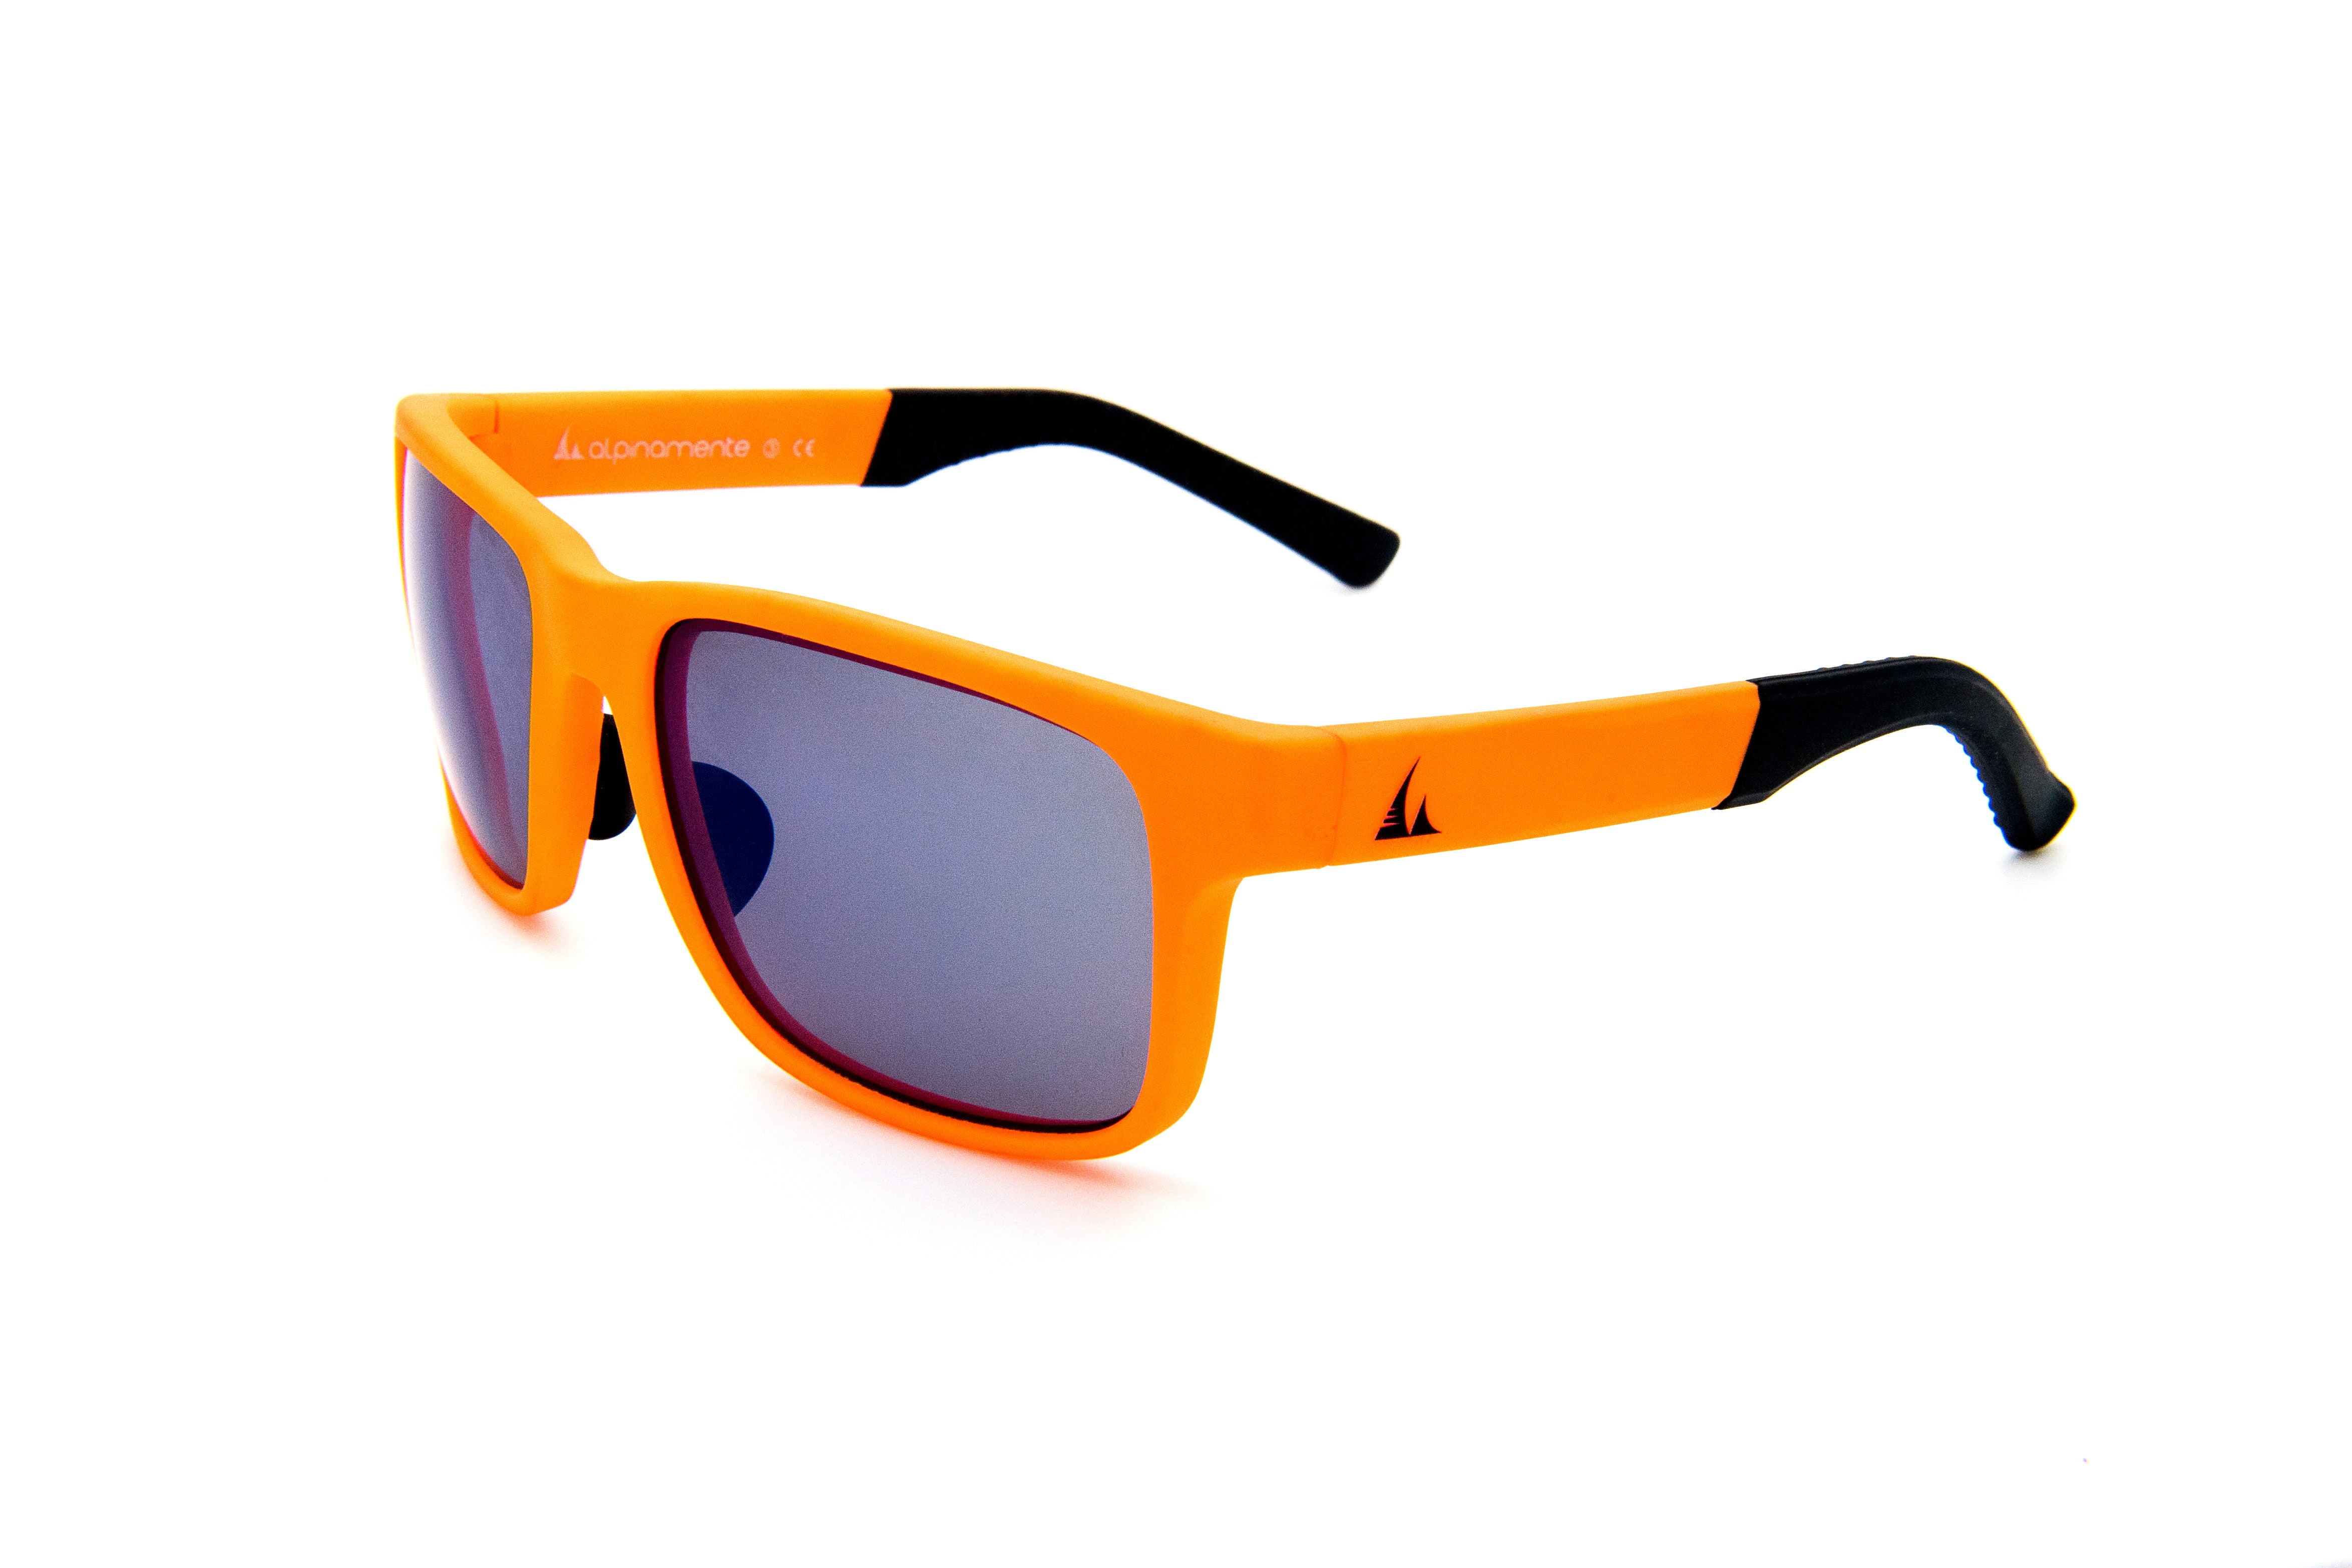 ALPINAMENTE 3264m Sunglasses - Orange